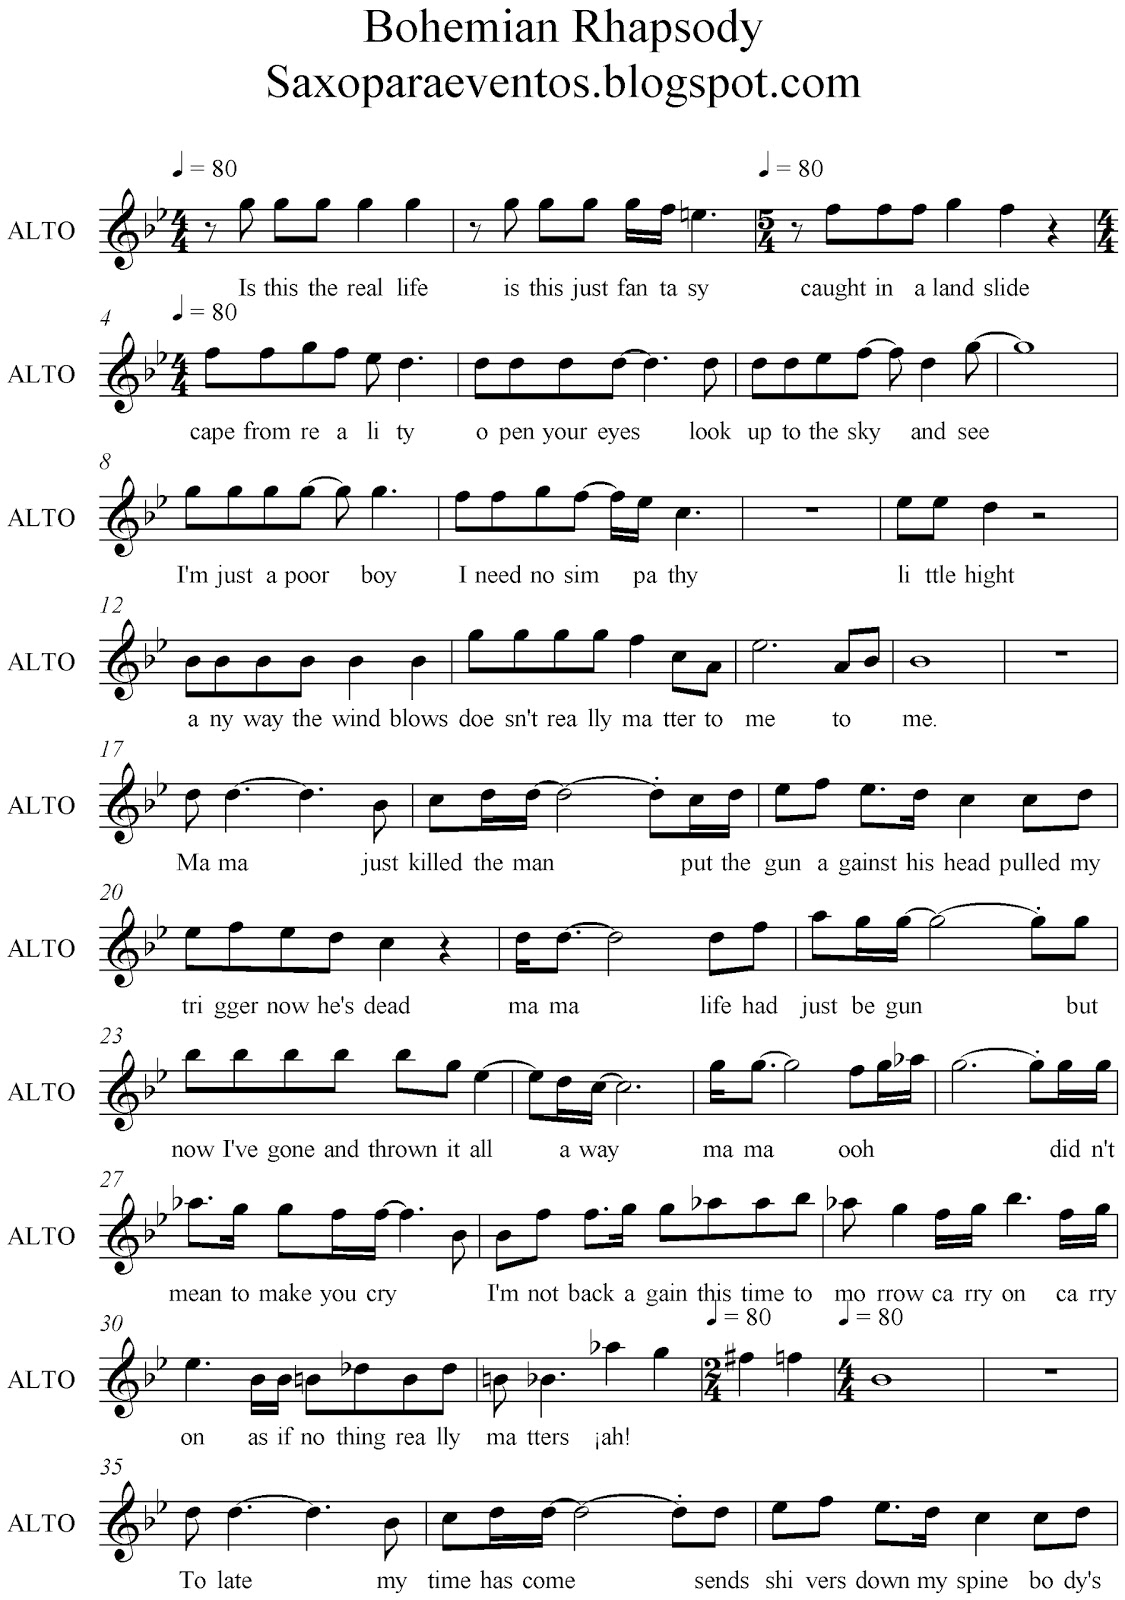 excursionismo Primitivo Distinguir Partitura de rapsodia bohemia - Bohemian Rhapsody sheet - Partituras y  pistas para saxo | Sheet music and Play Along for sax